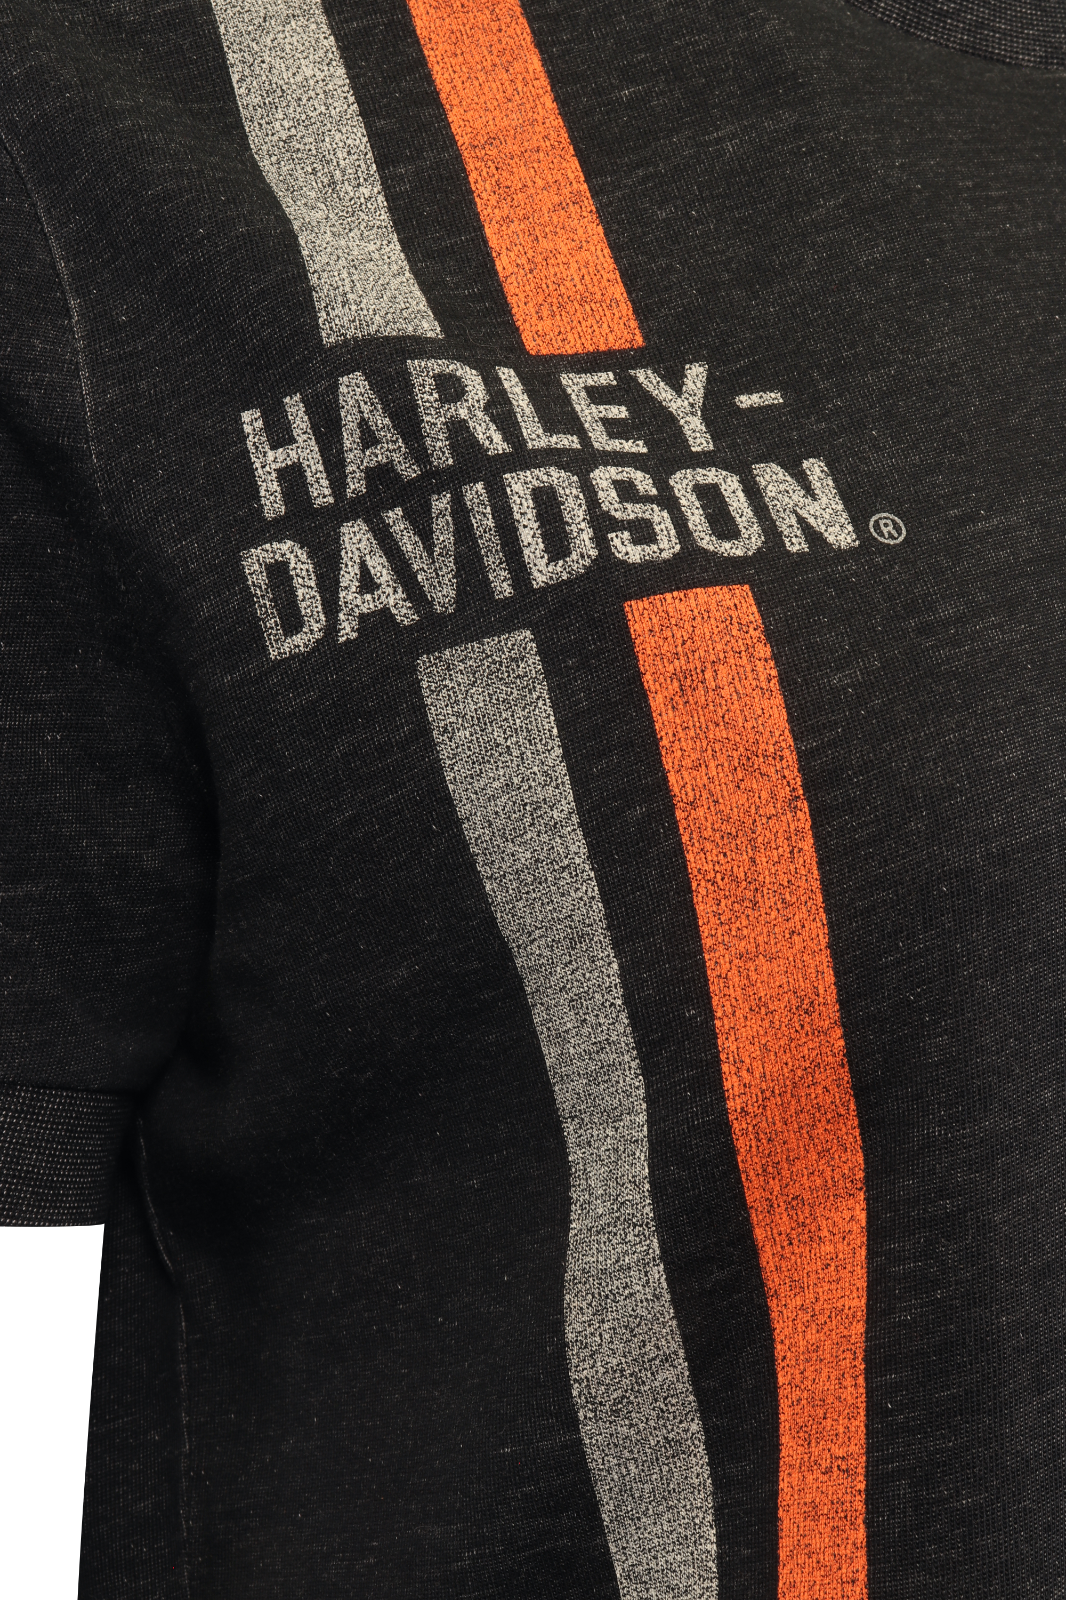 Harley-Davidson Women's T-Shirt Checkered Racing Stripes S/S (S38)